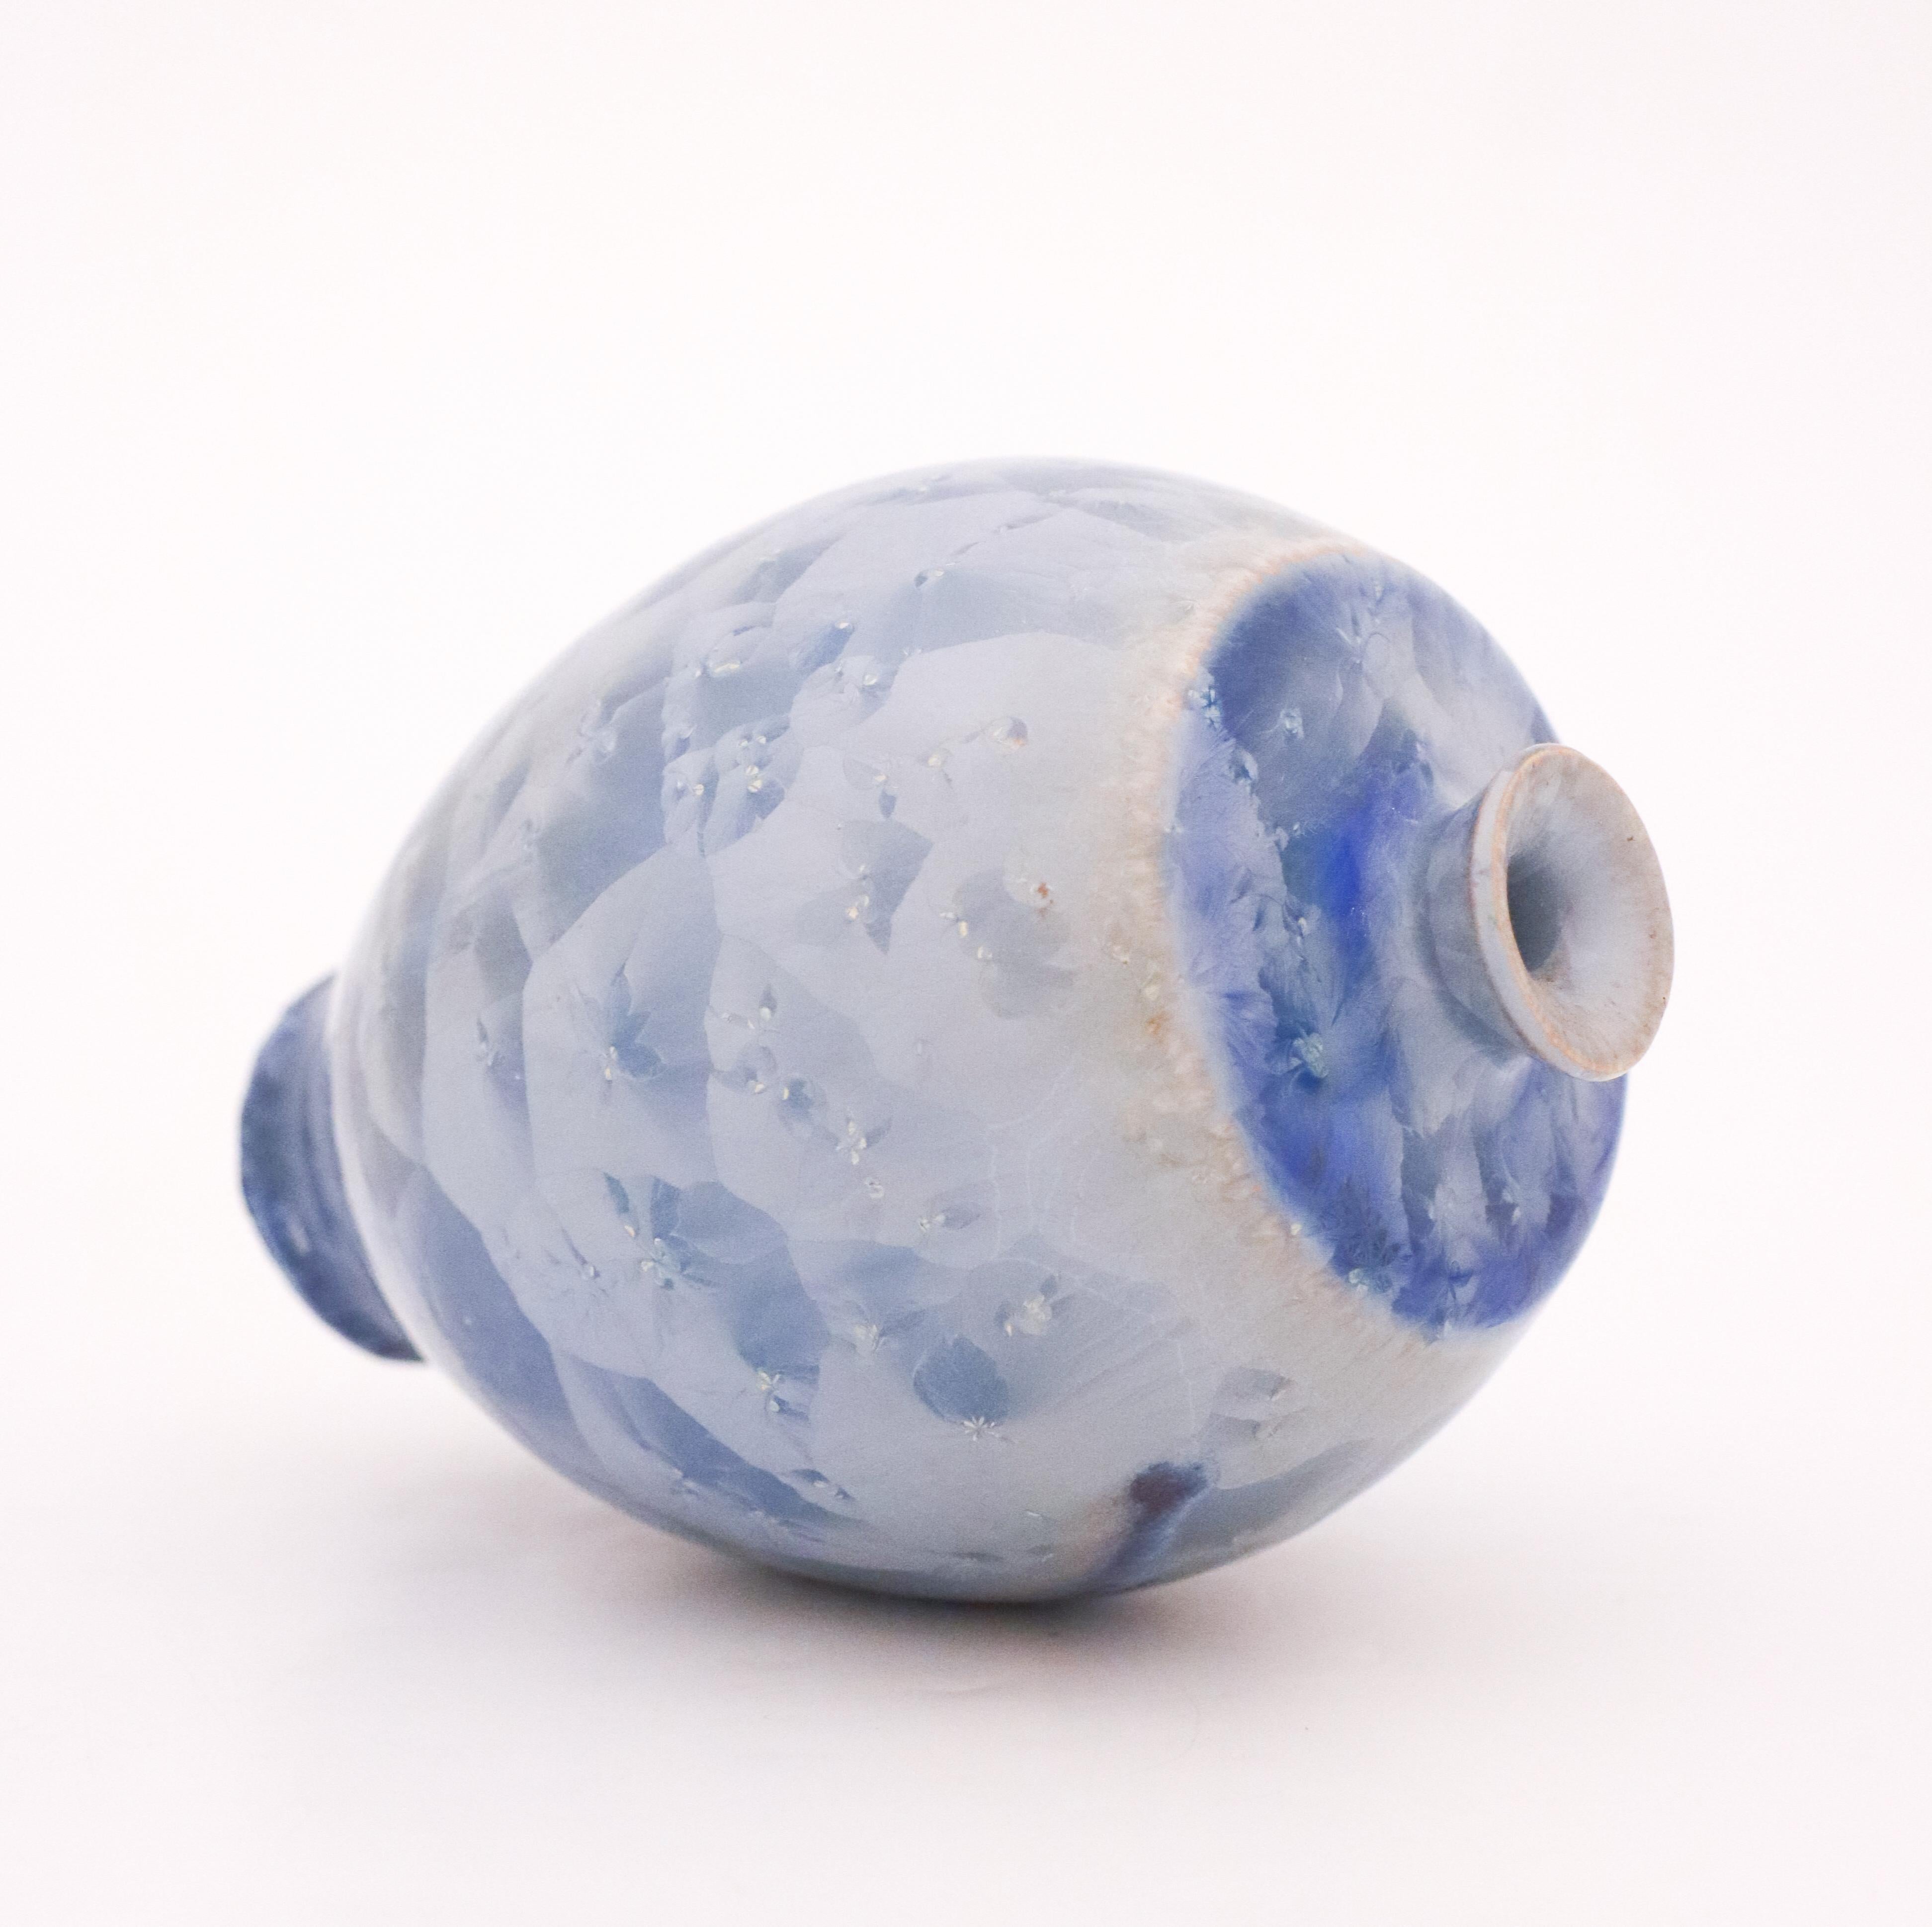 Glazed Isak Isaksson Vase, Blue Crystalline Glaze, Contemporary Swedish Ceramicist